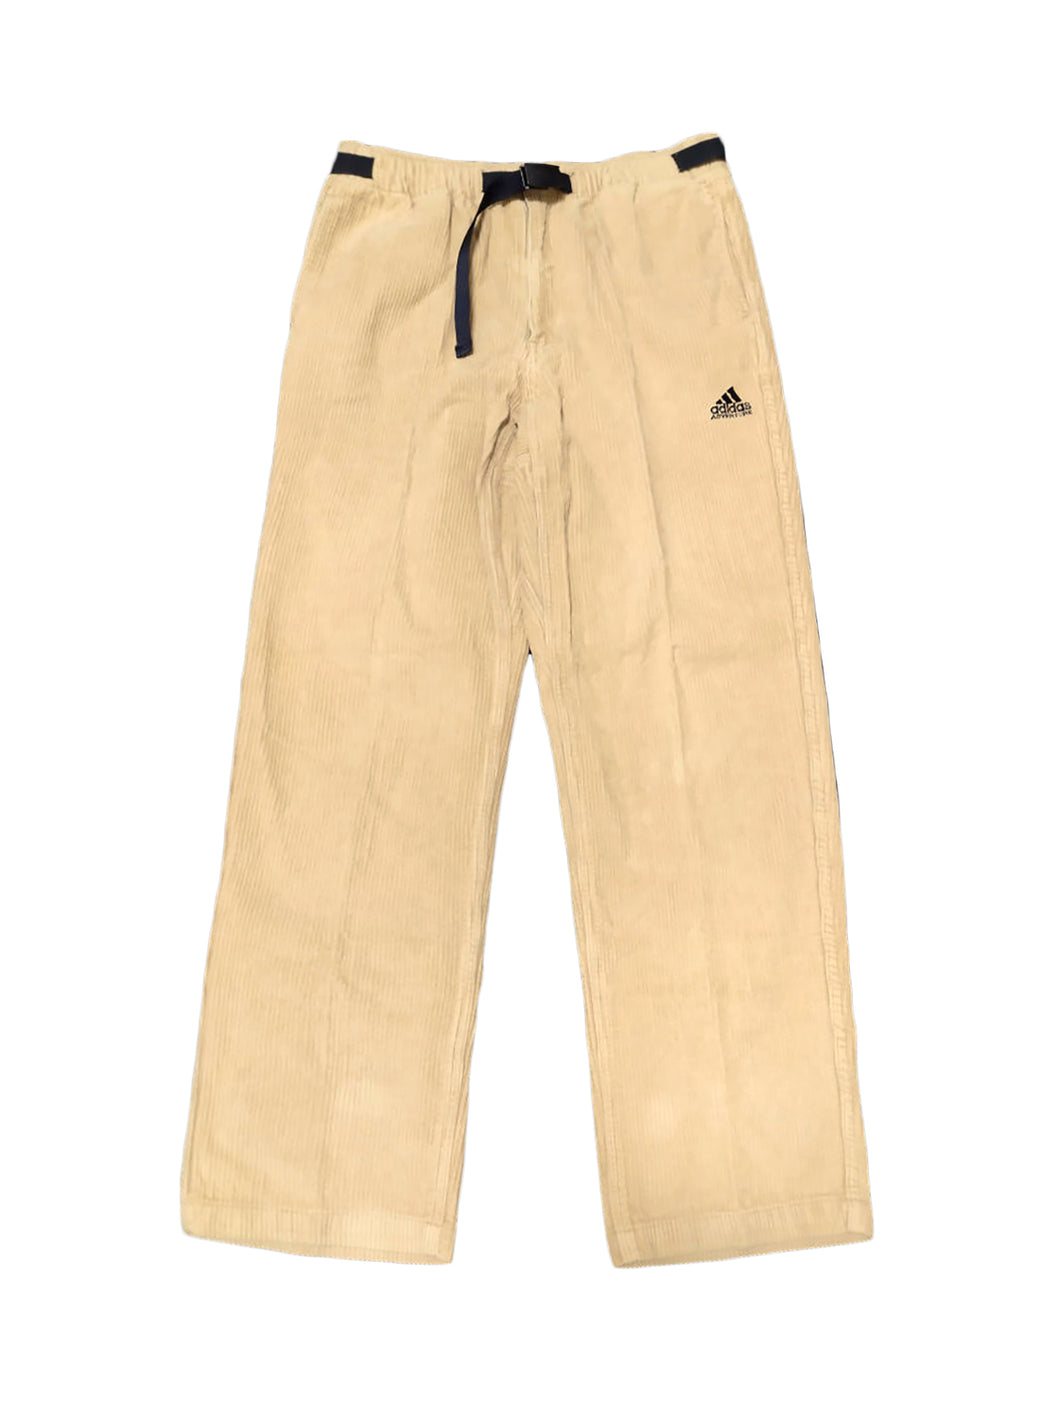 Adidas Adventure Rare Corduroy Beige Pants